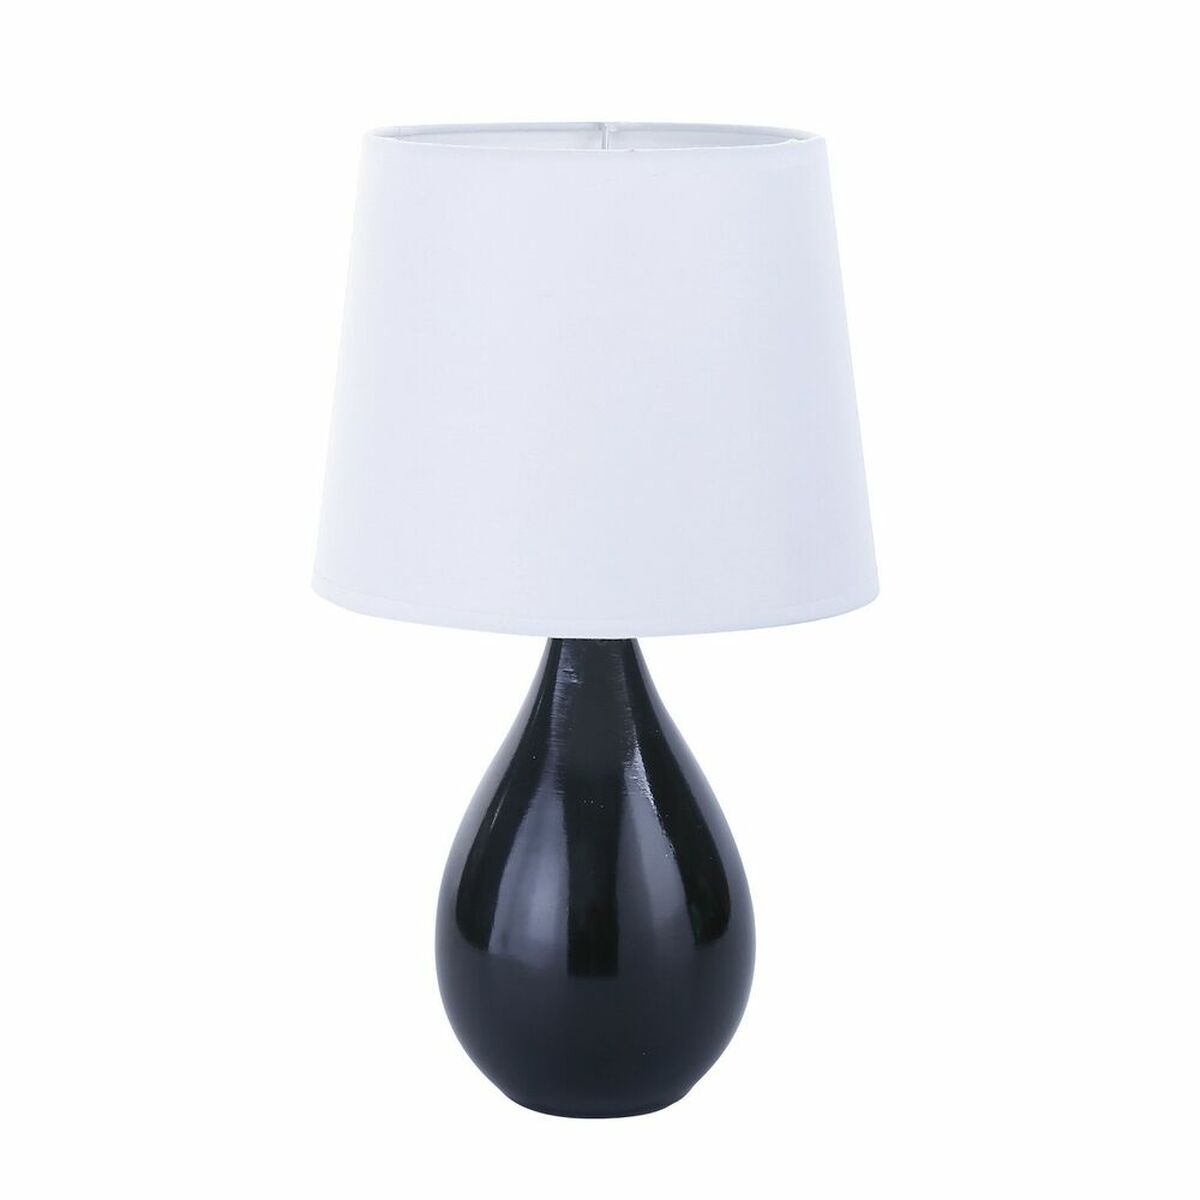 Desk lamp Versa Camy Black Ceramic (20 x 35 x 20 cm)